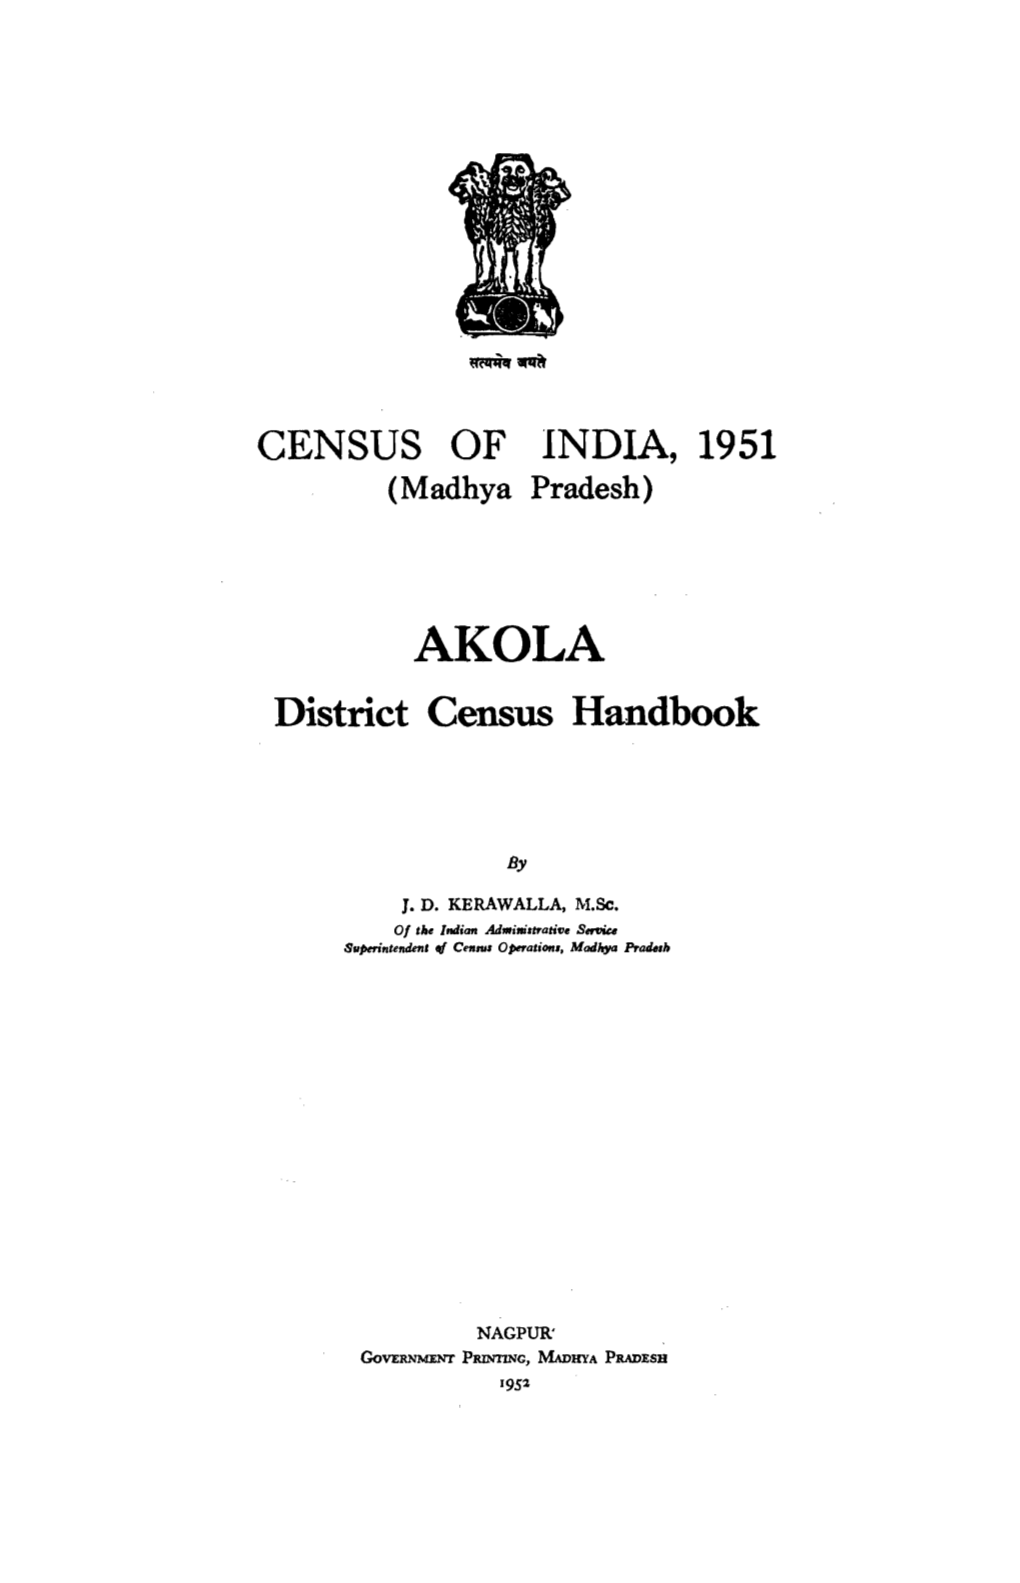 District Census Handbook, Akola